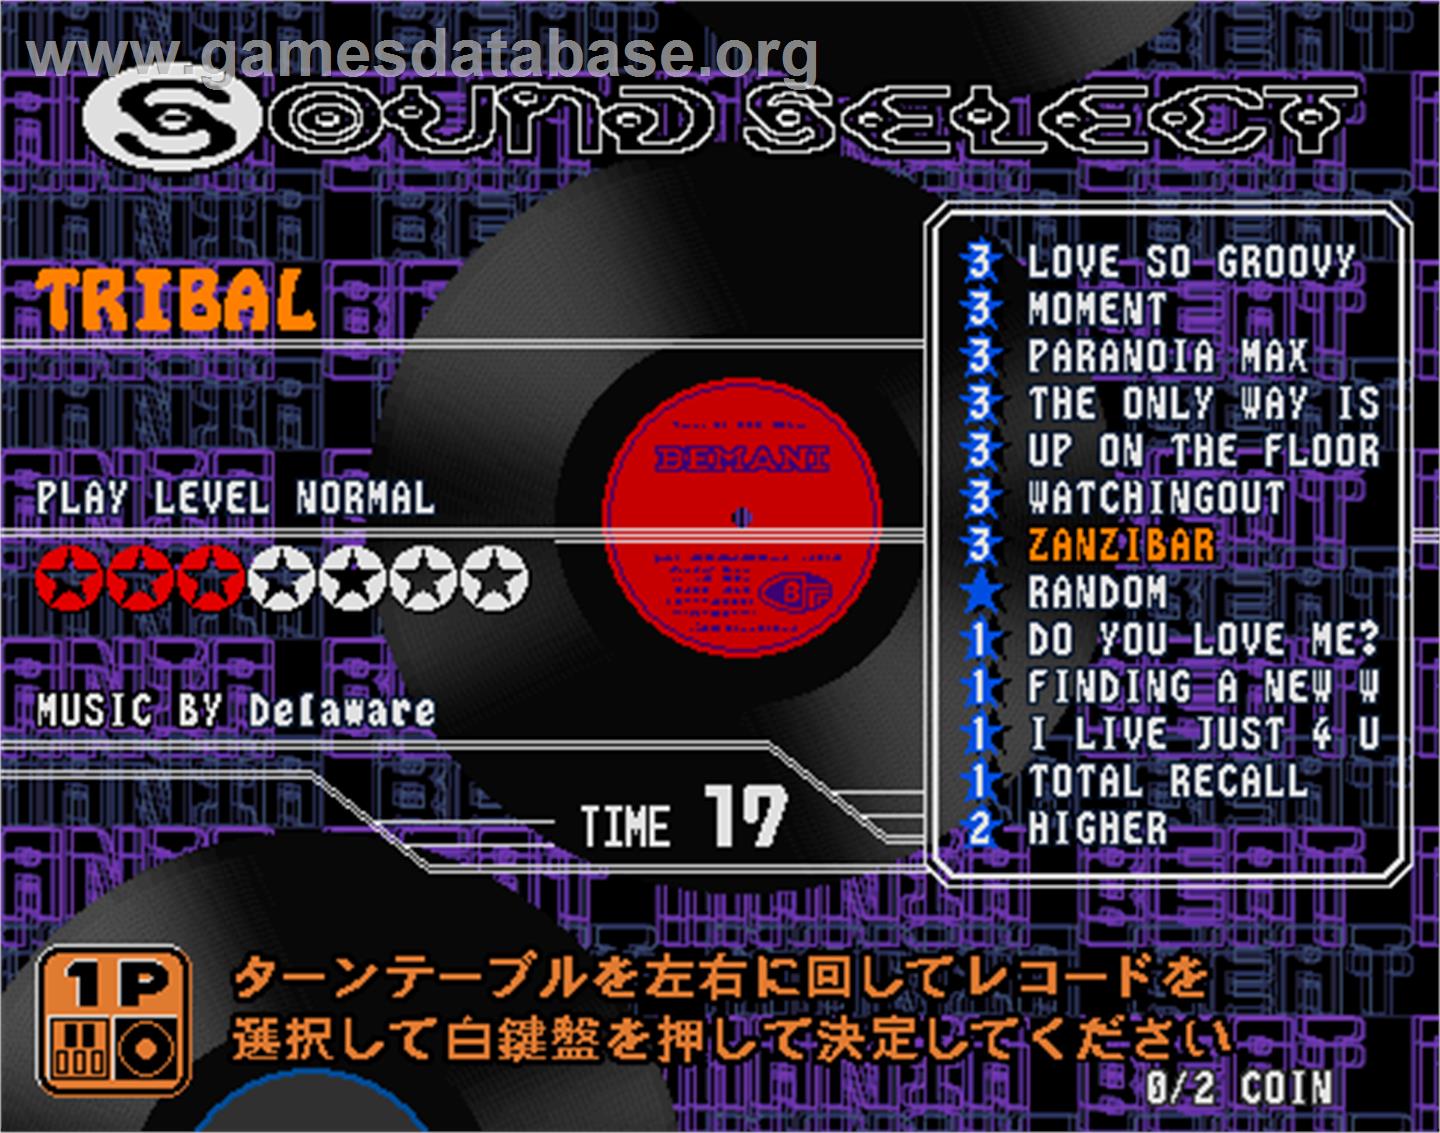 beatmania complete MIX 2 - Arcade - Artwork - Select Screen